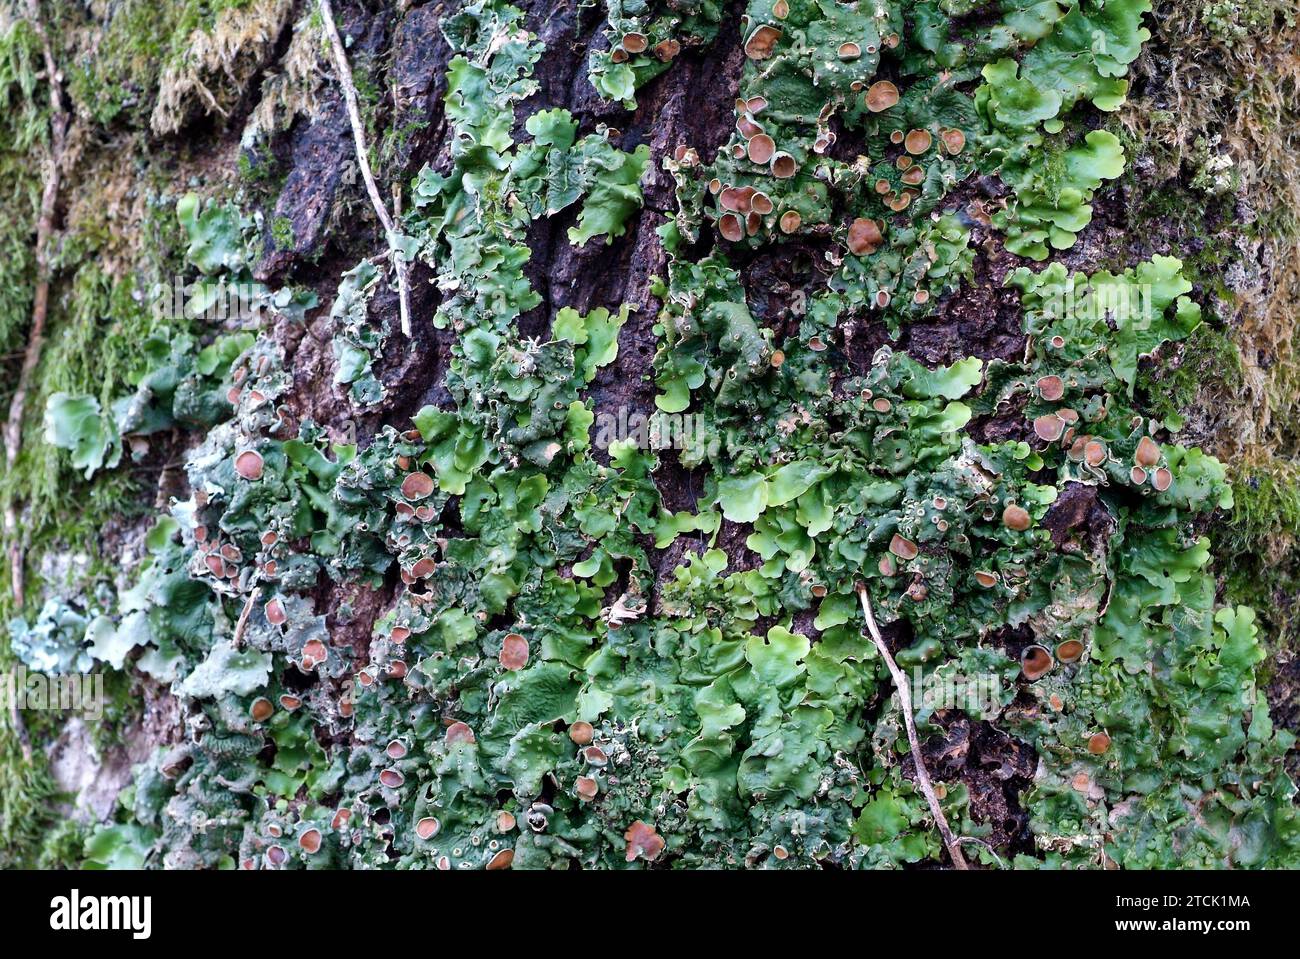 Pleurosticta acetabulum or Parmelia acetabulum is a foliose lichen that grows on tree barks. Stock Photo